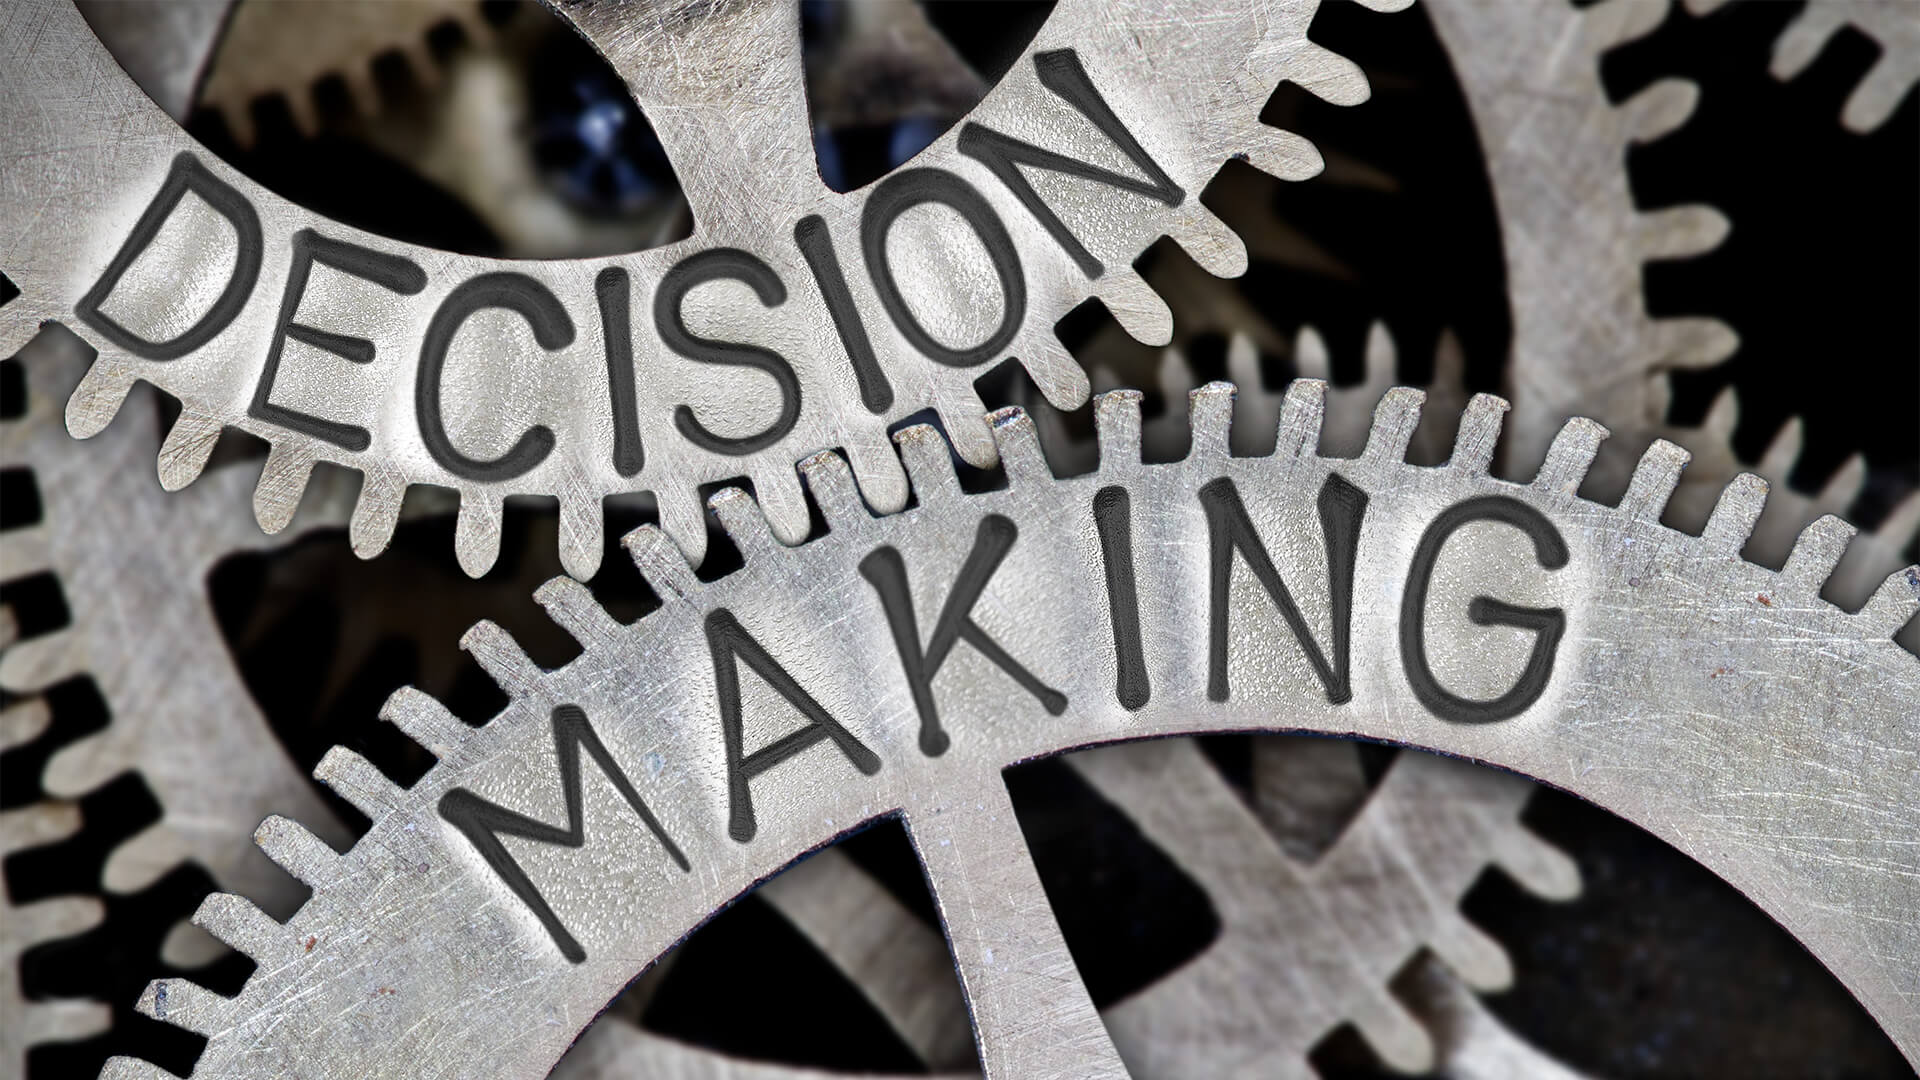 Decision-making